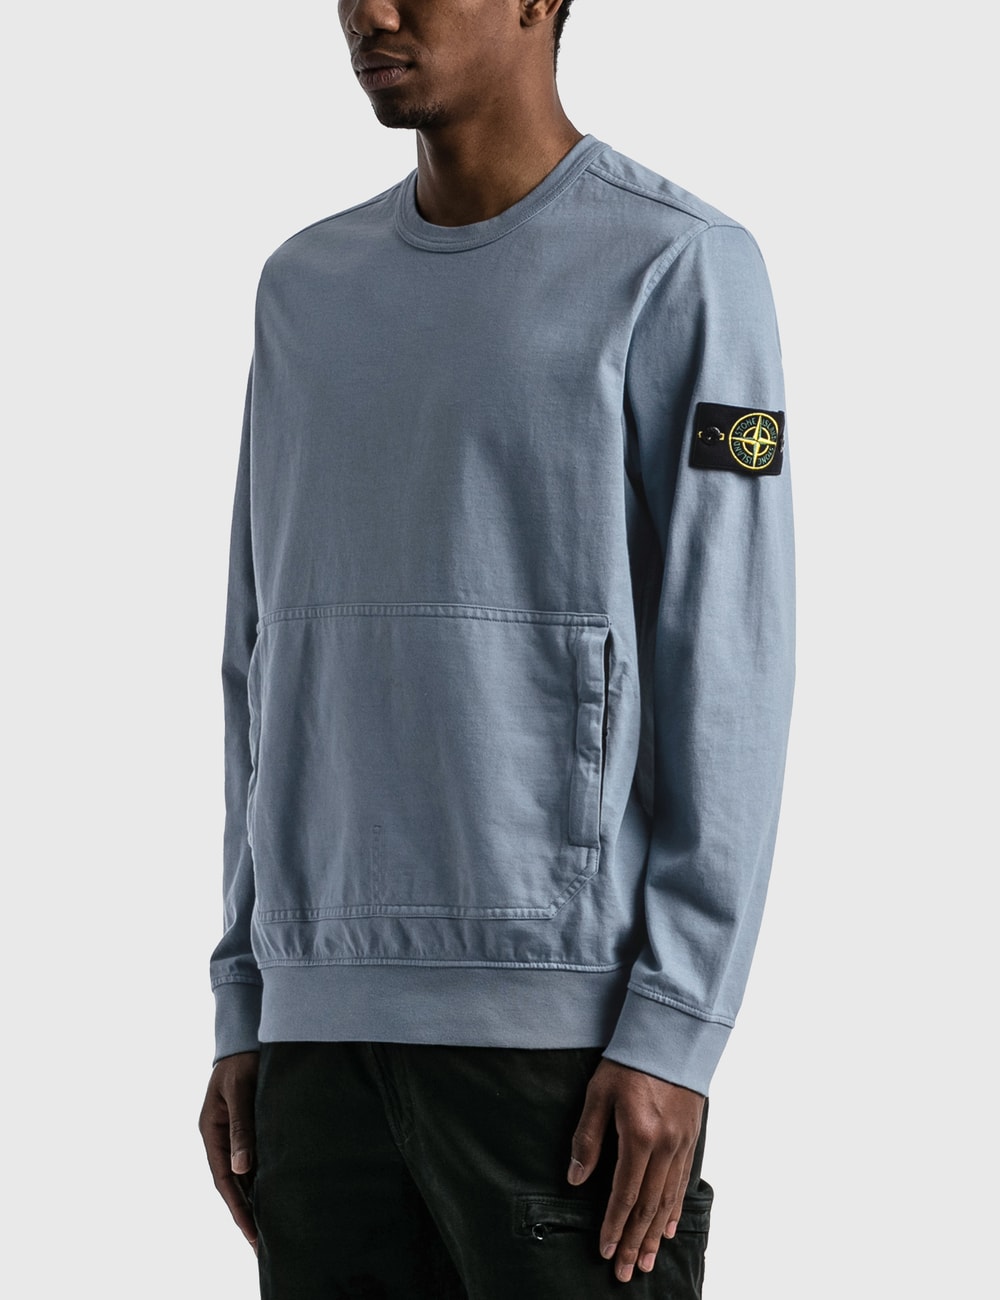 Stone Island - Sweatshirt With Pocket | HBX